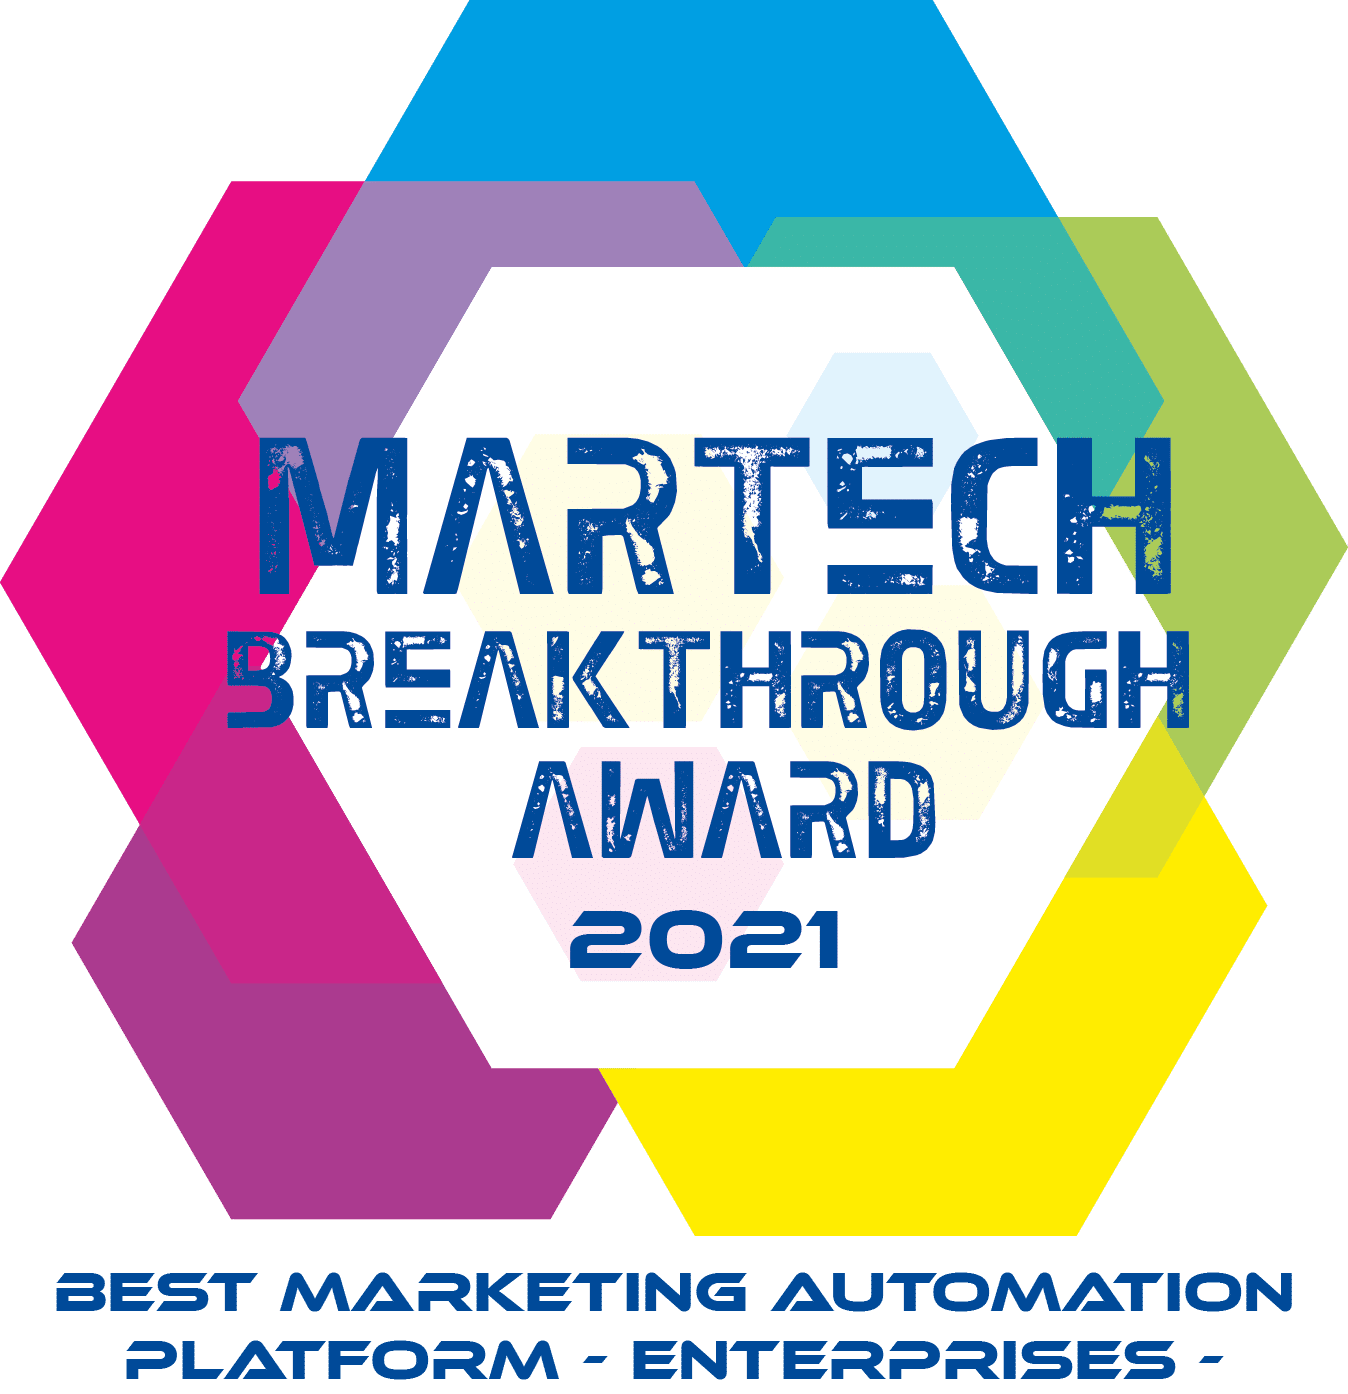 Best Enterprise Marketing Automation Platform: Mapp wins 2021 MarTech Breakthrough Award